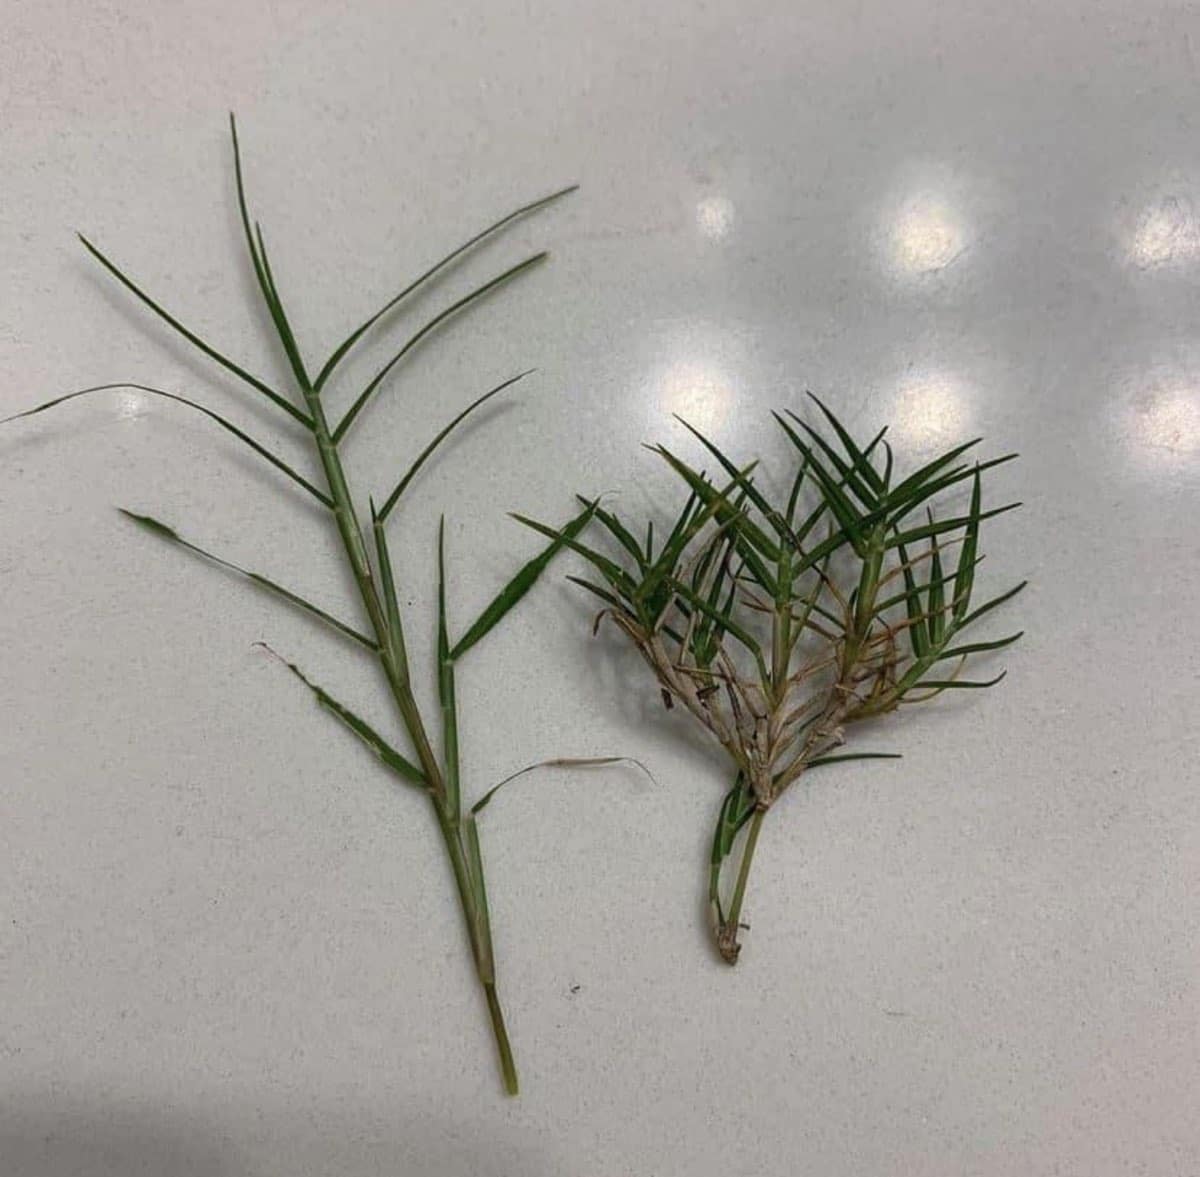 Bermuda Grass Rejuvenation